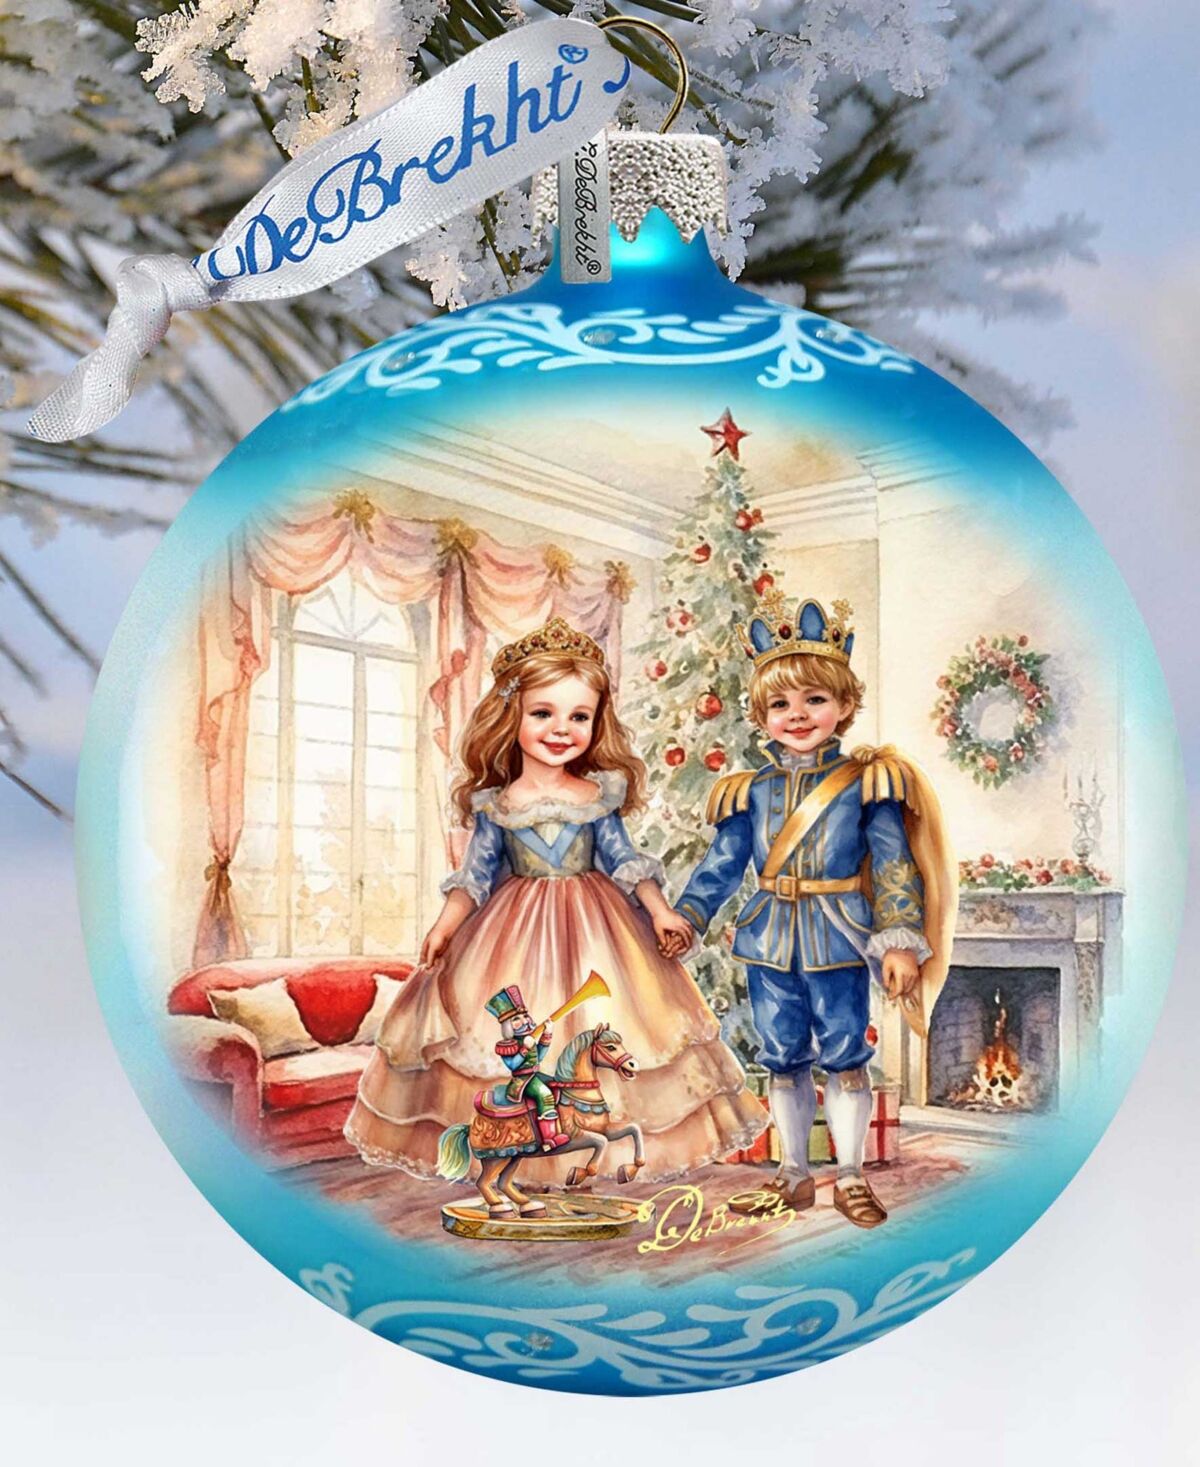 Designocracy Nutcracker Ballet-Clara and Prince Lg Holiday Collectible Ornaments G. DeBrekht - Multi Color